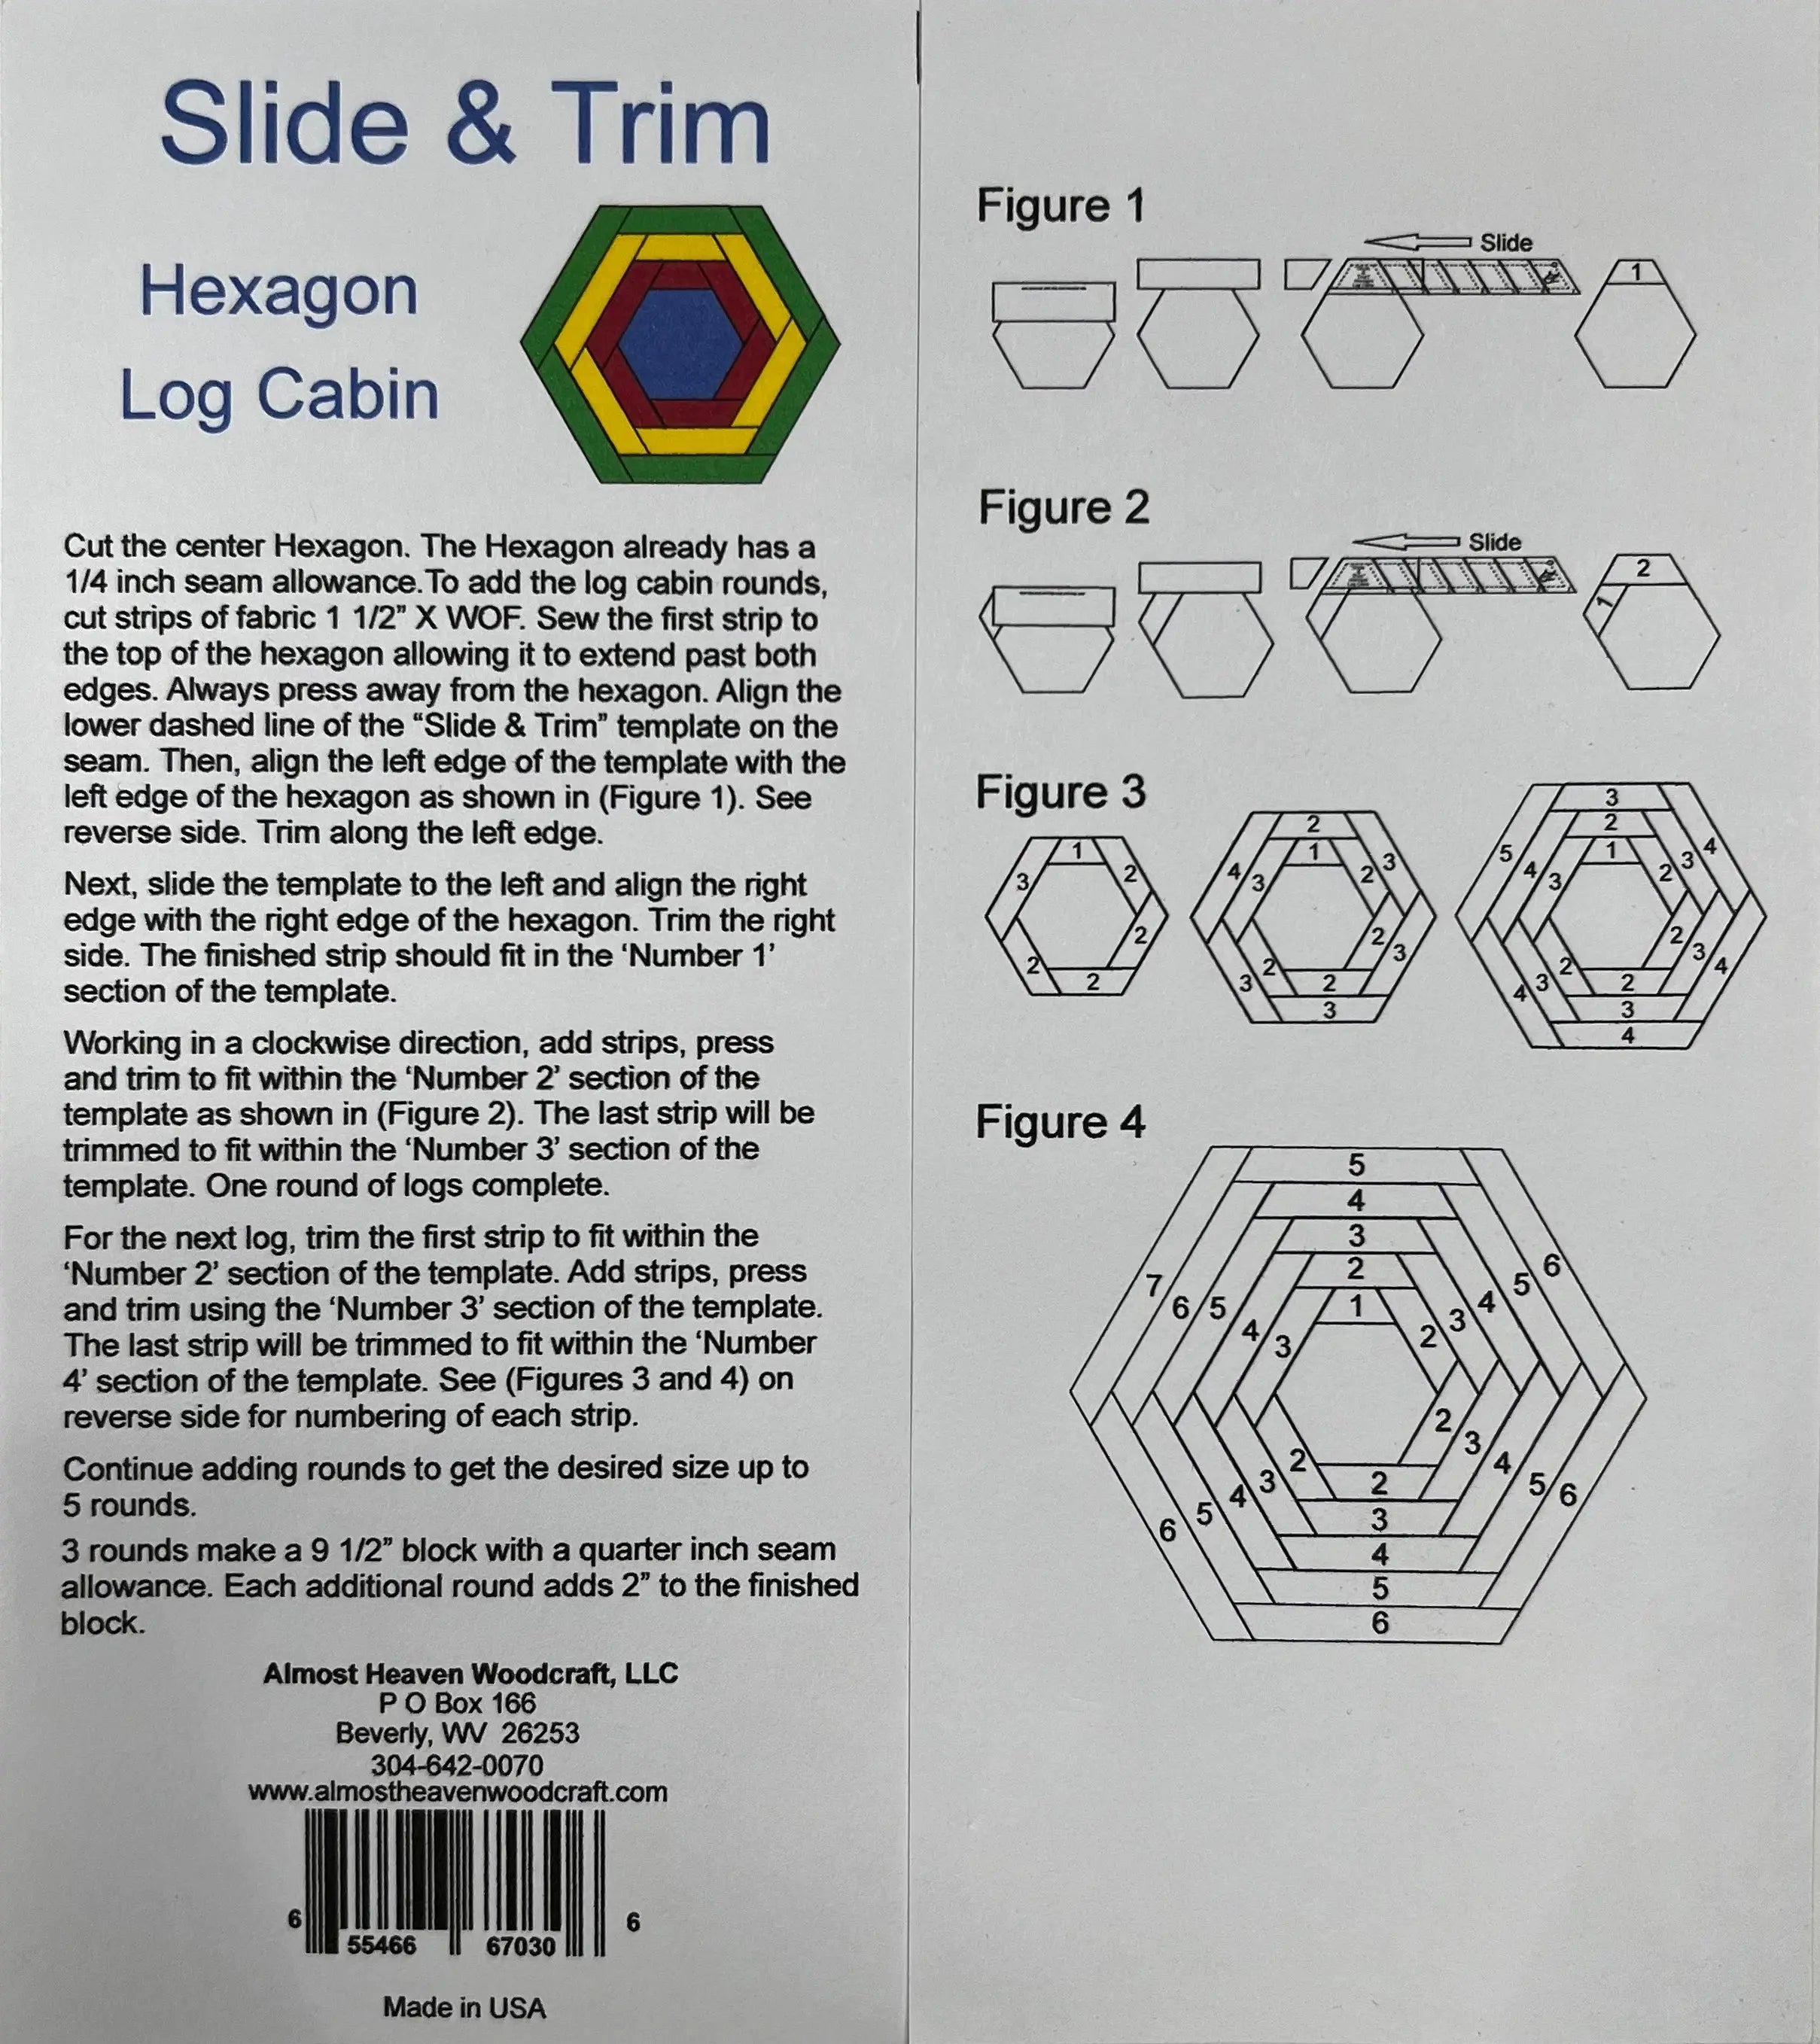 Slide & Trim Hexagon Log Cabin Template